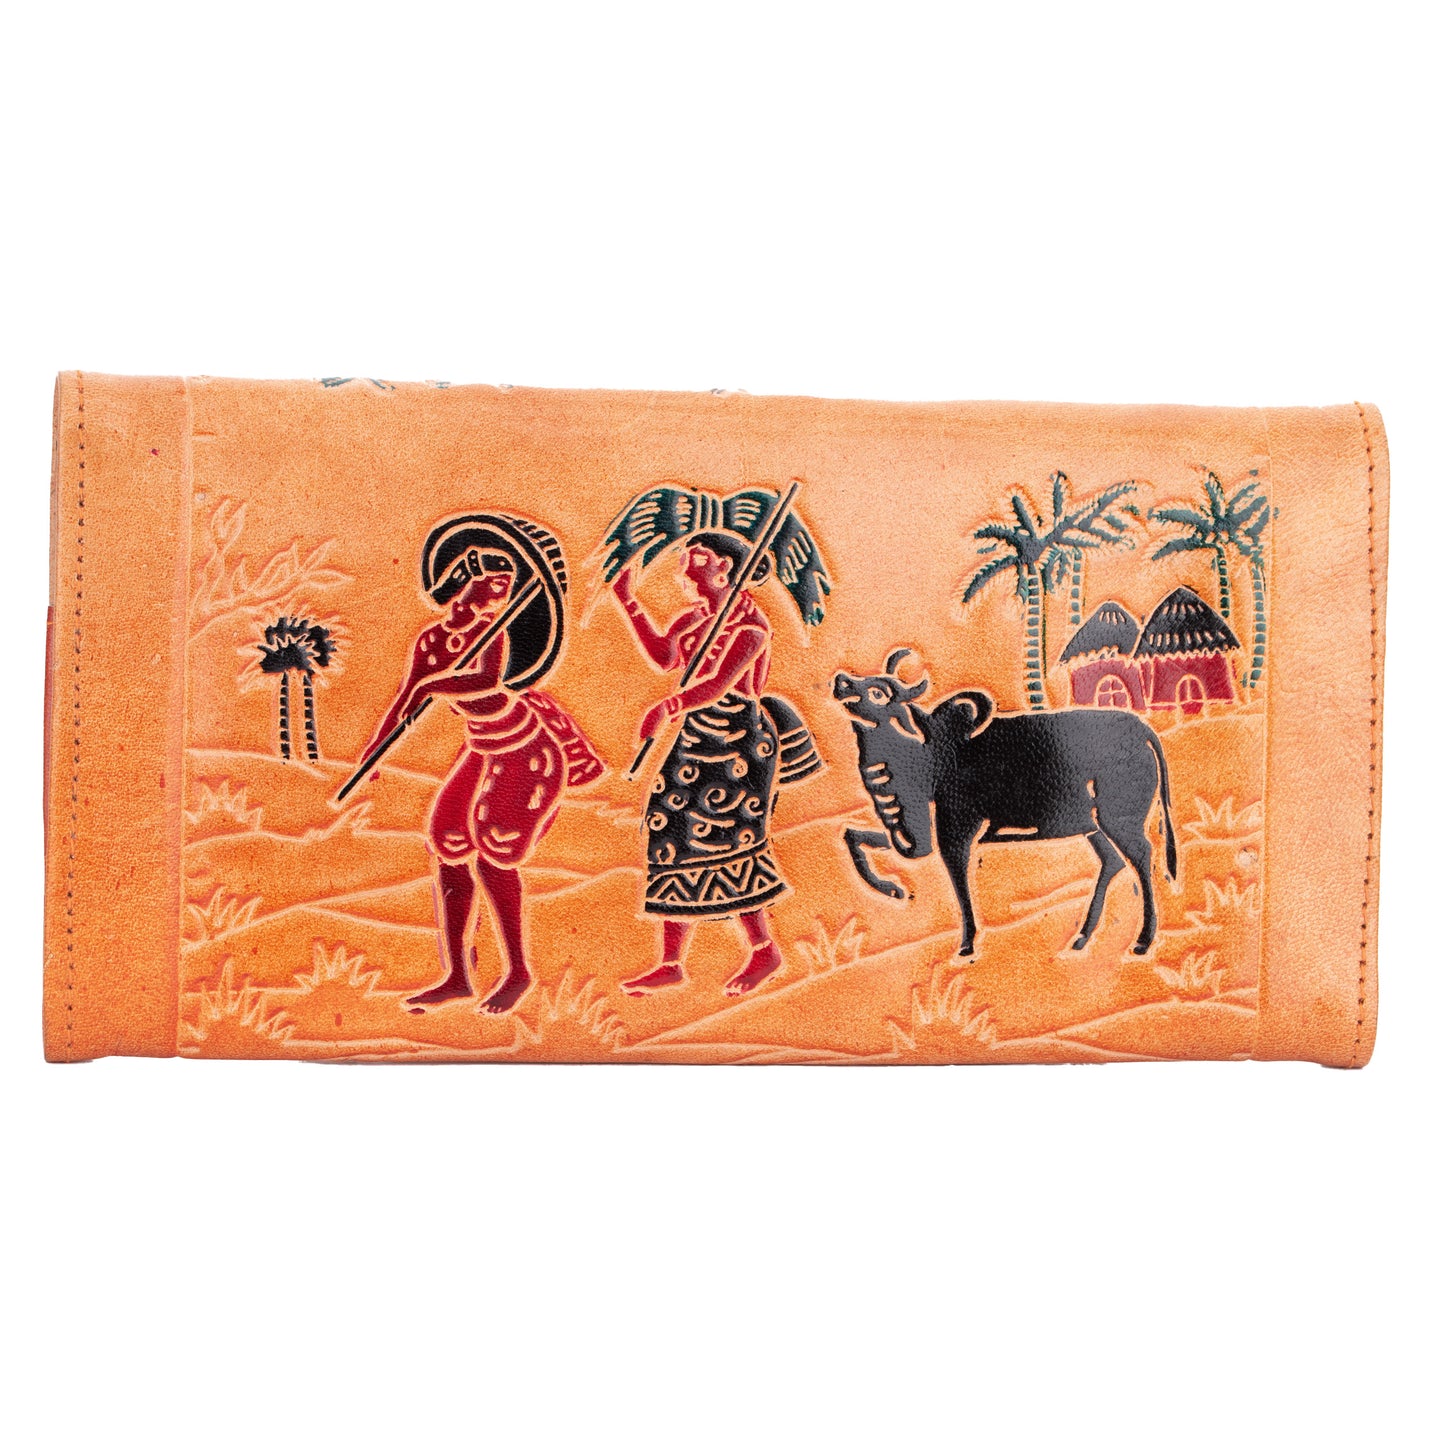 Shantiniketan Leather Large Clutch Handbag (10*5)